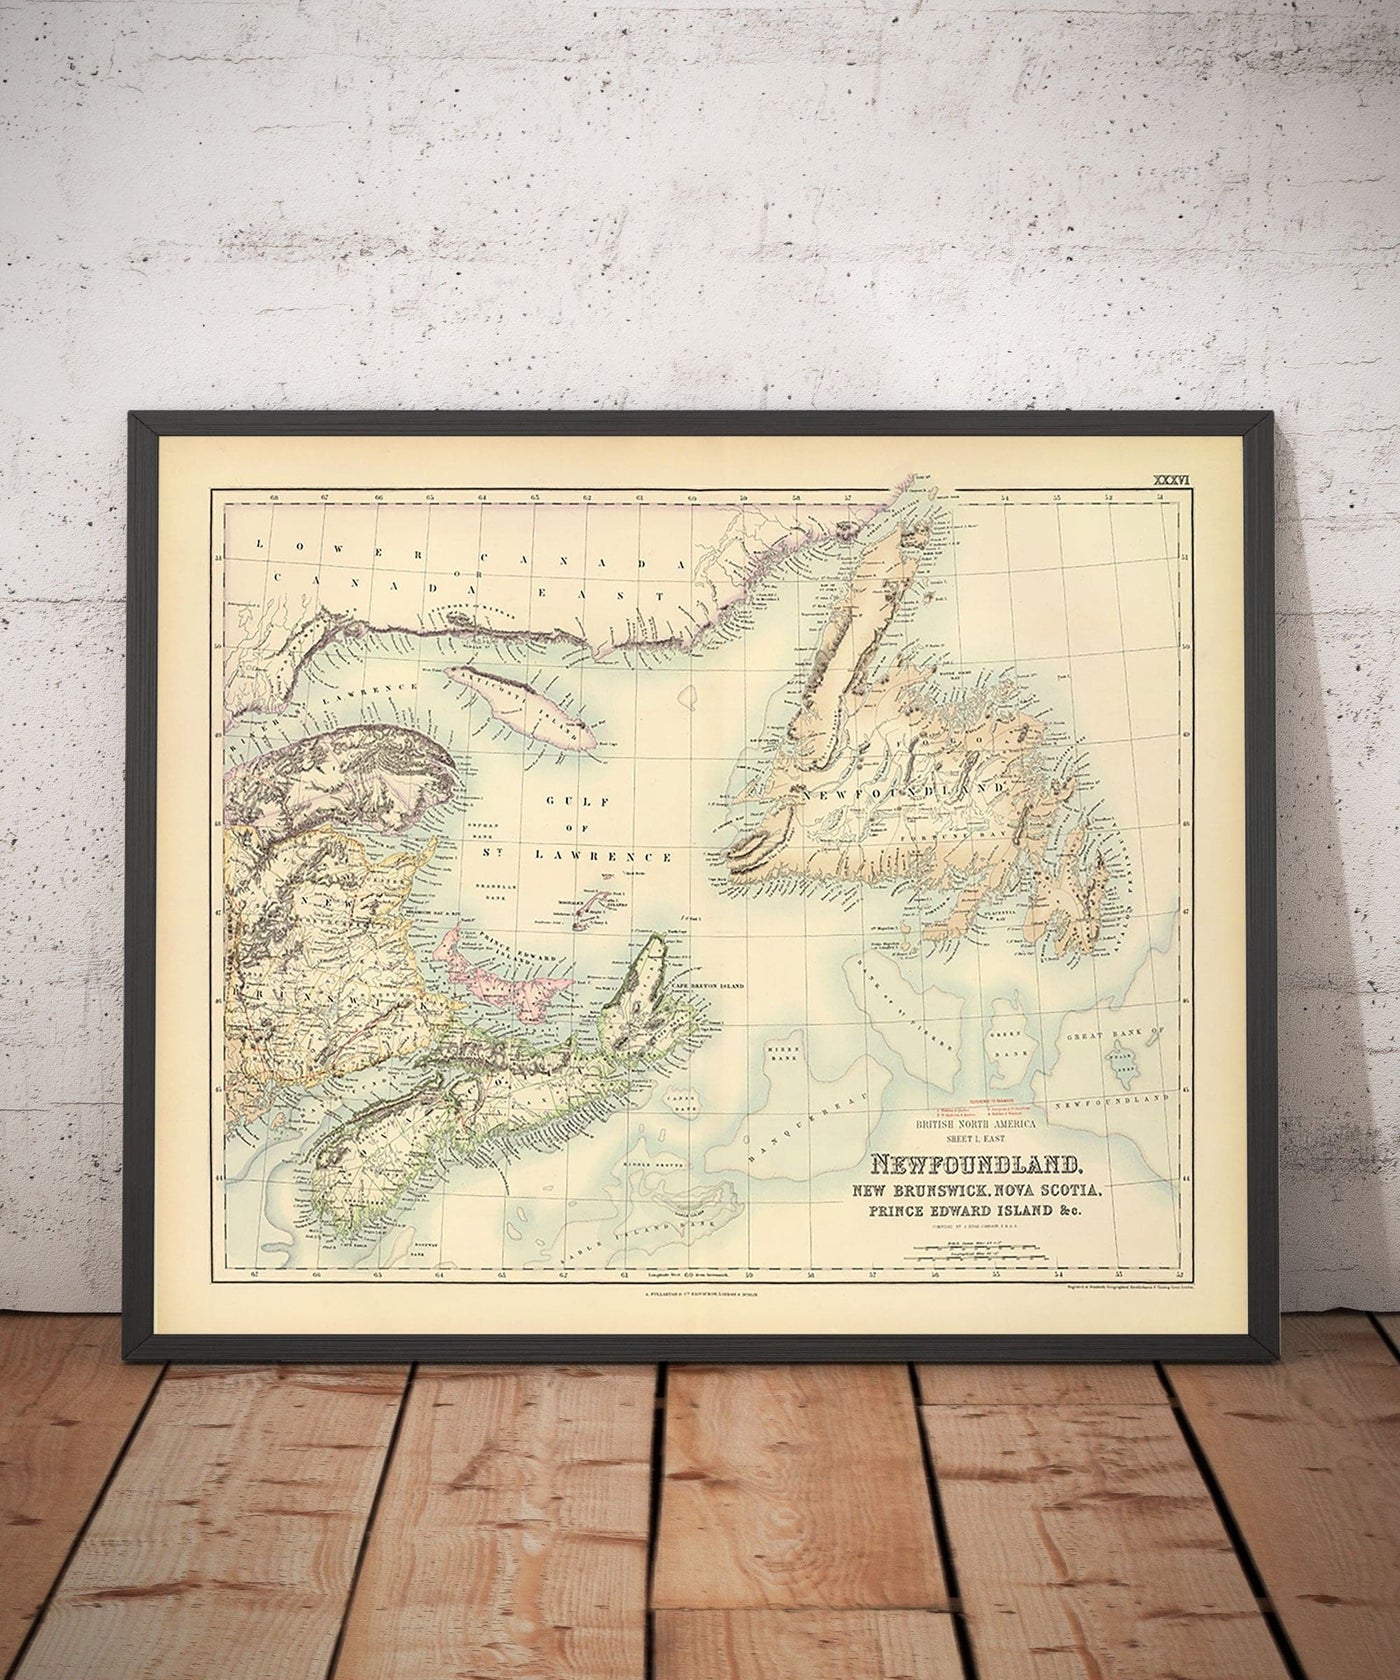 Old Map of Newfoundland, Nova Scotia & New Brunswick, 1872 by Fullarton - Canada, Colonial British North America